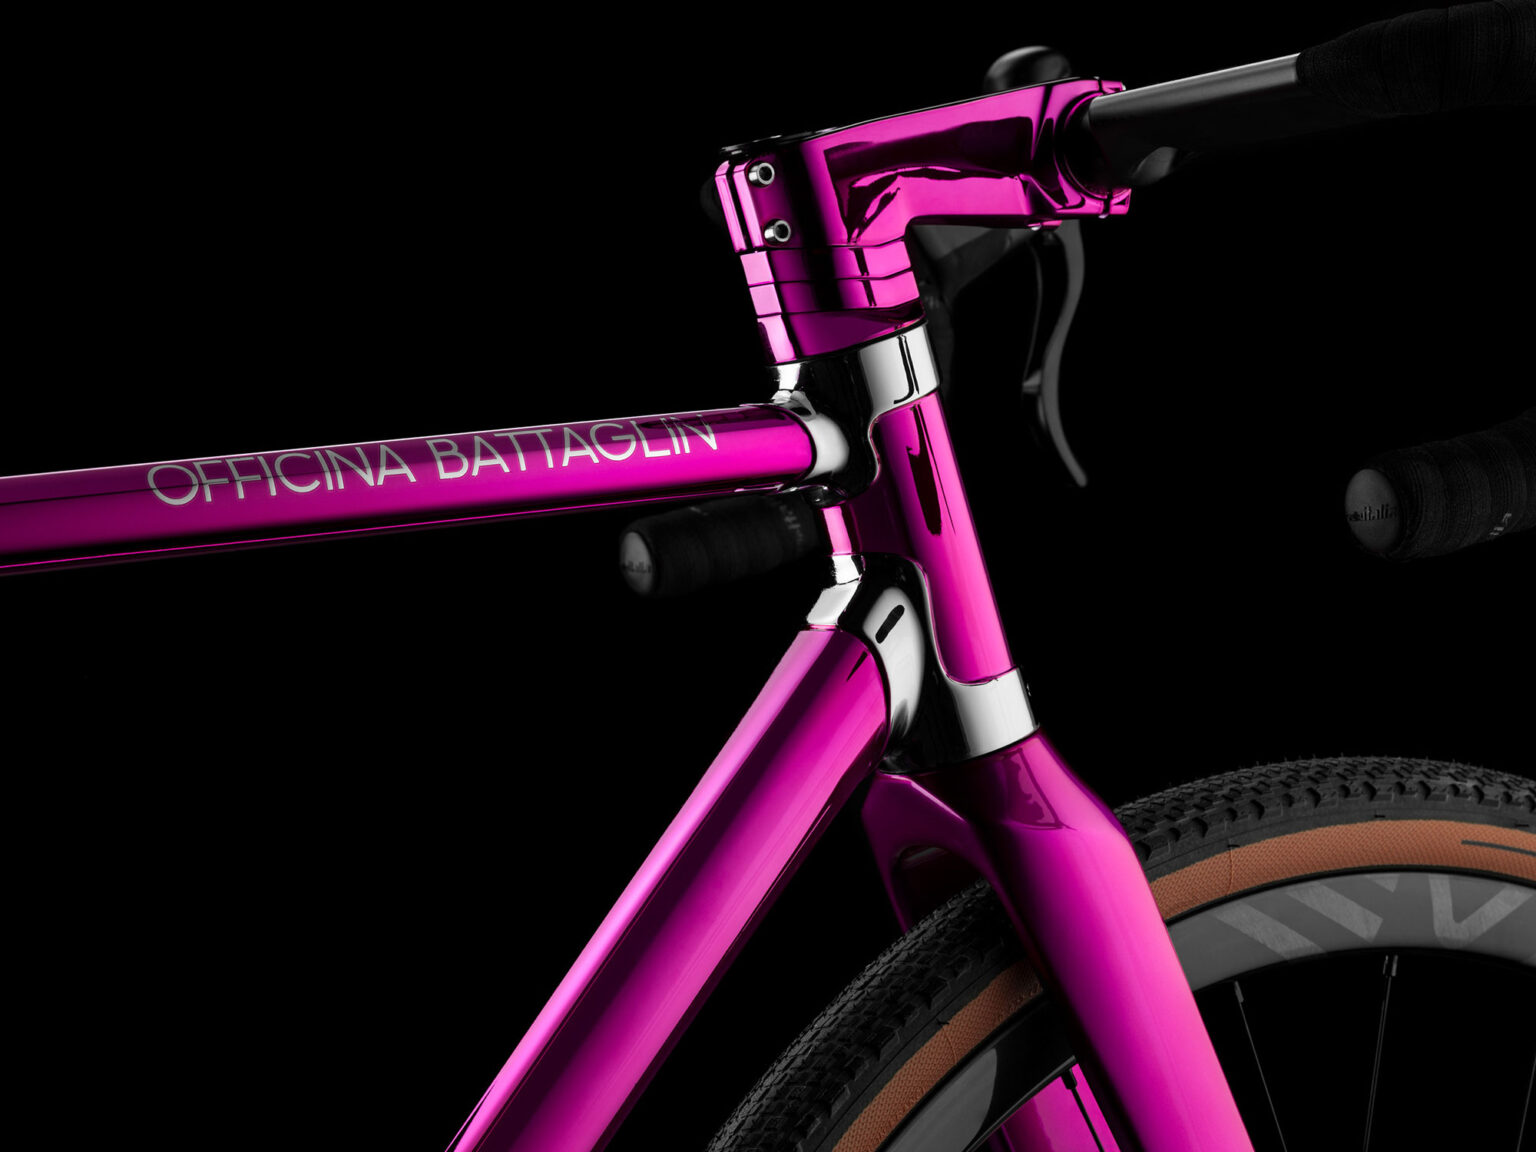 Battaglin Portofino G custom limited edition steel gravel bike in Cromovelato pink, lugged headtube